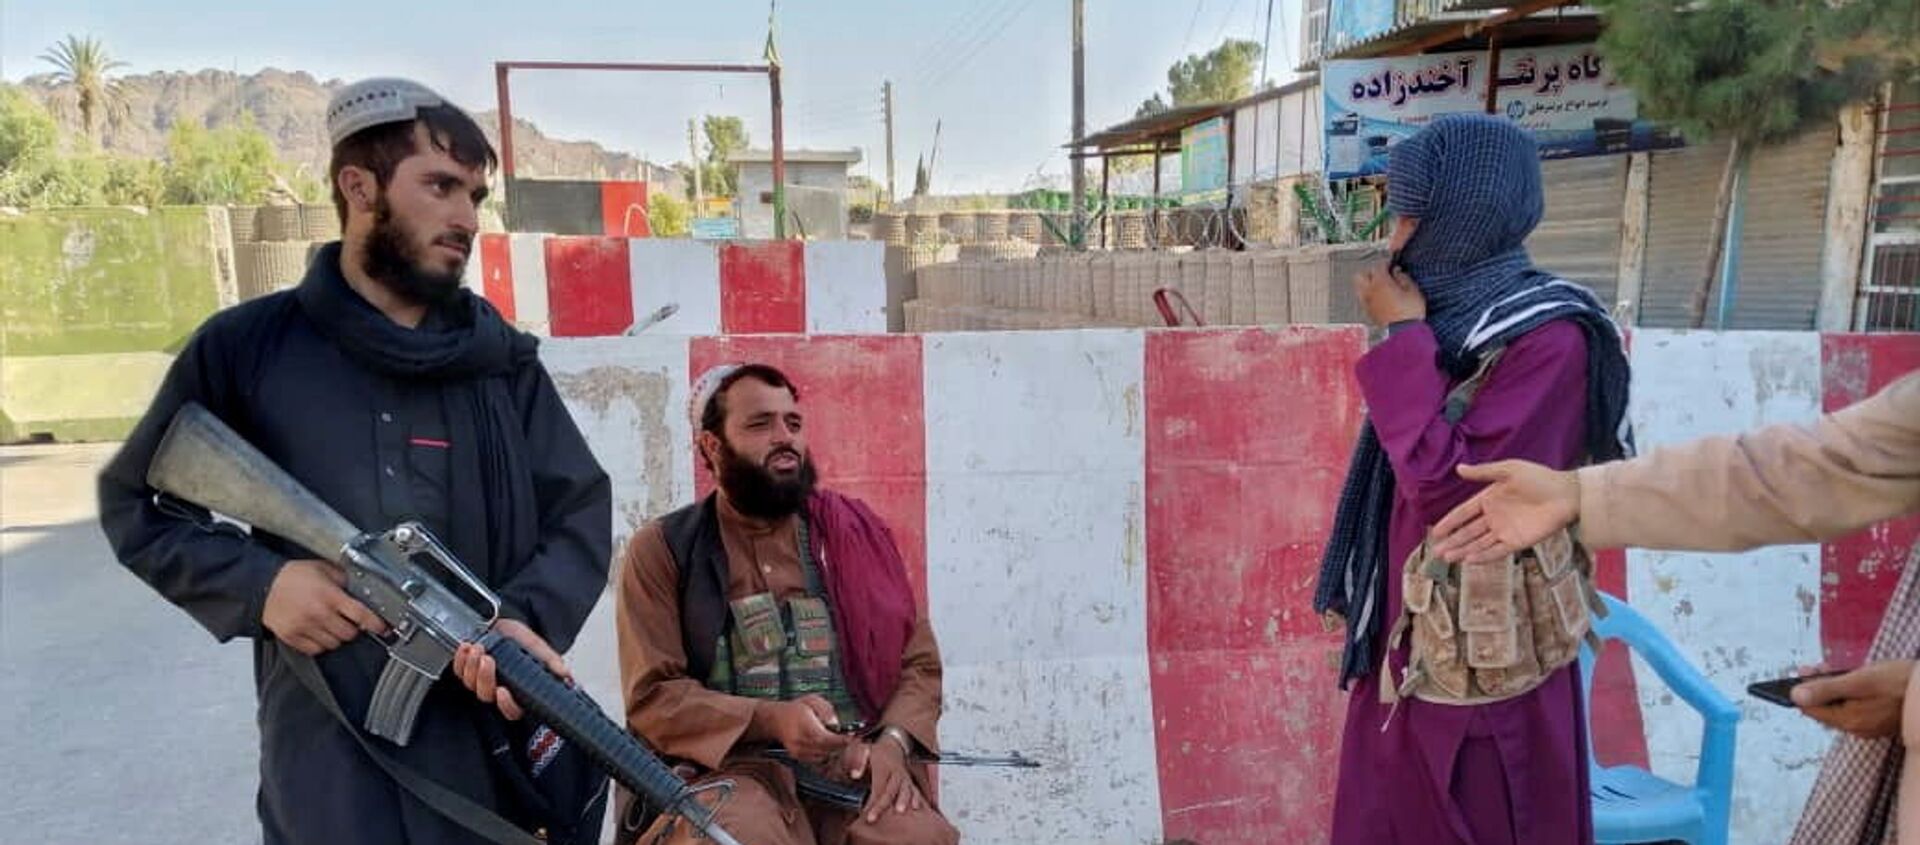 Боевики Талибана охраняют блокпост в Фарахе, Афганистан, 11 августа 2021 года. - Sputnik Абхазия, 1920, 13.08.2021